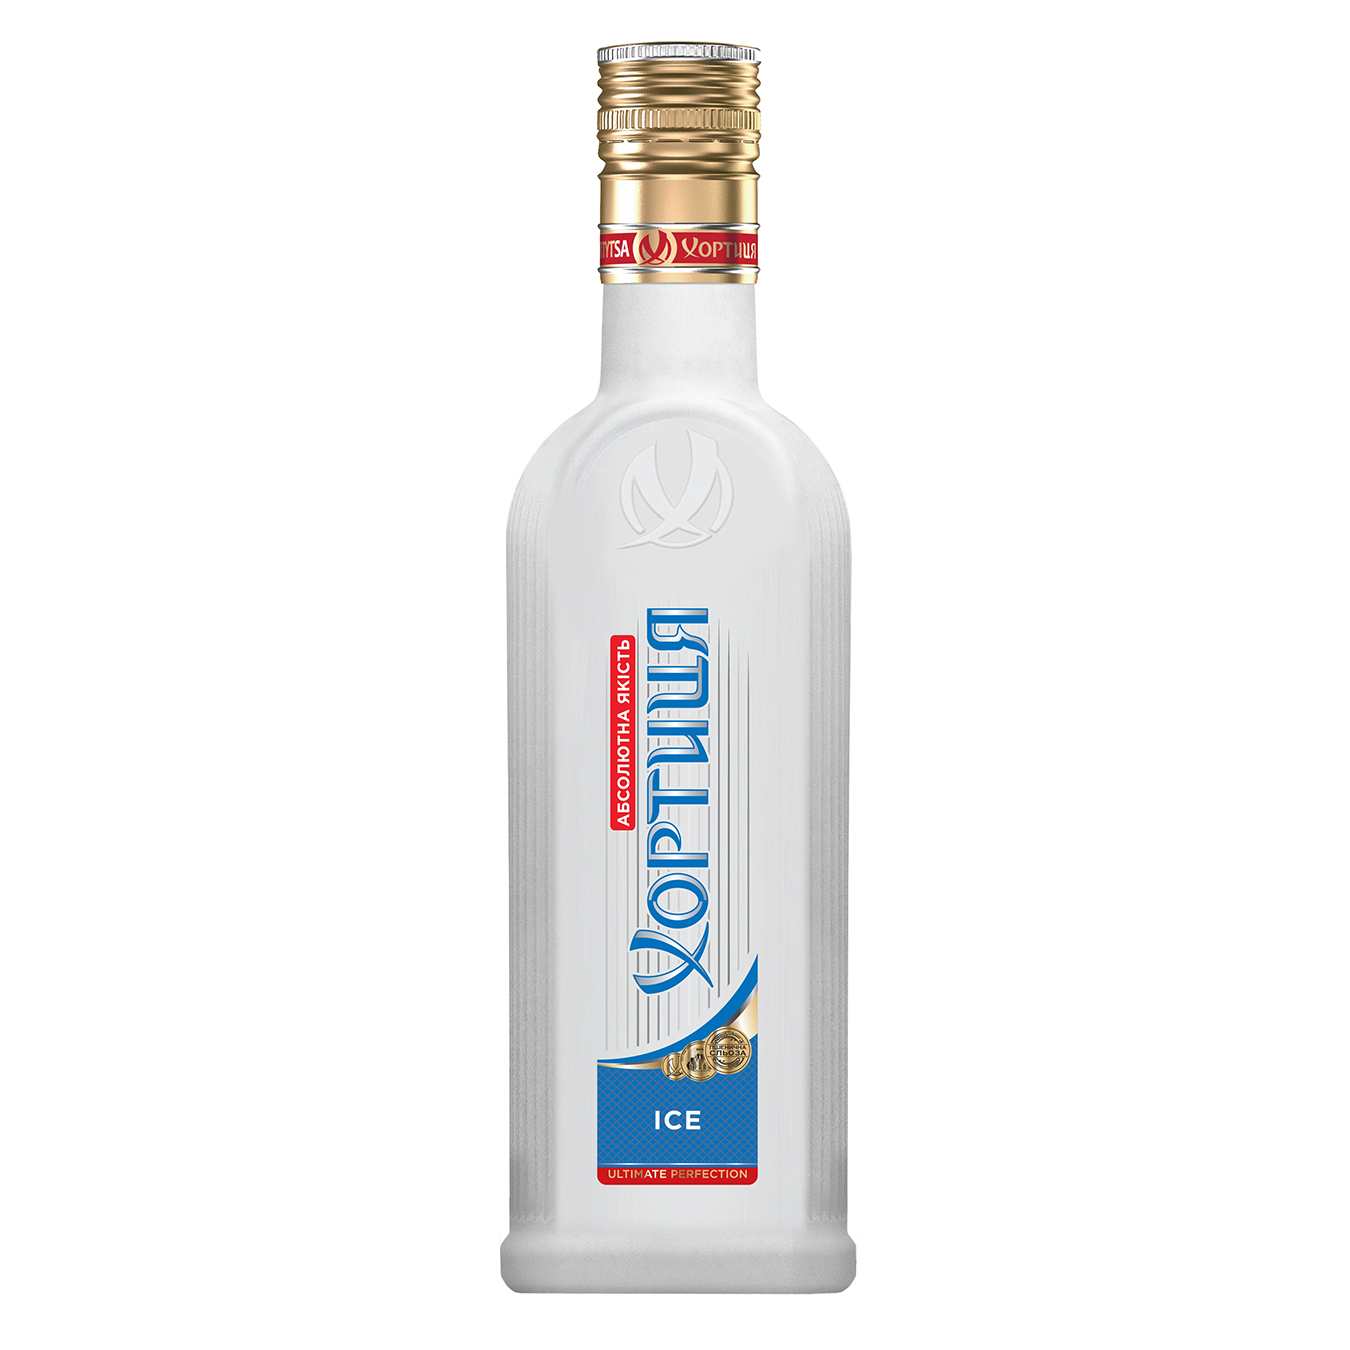 Vodka Хортиця Ice 40% 0,5l